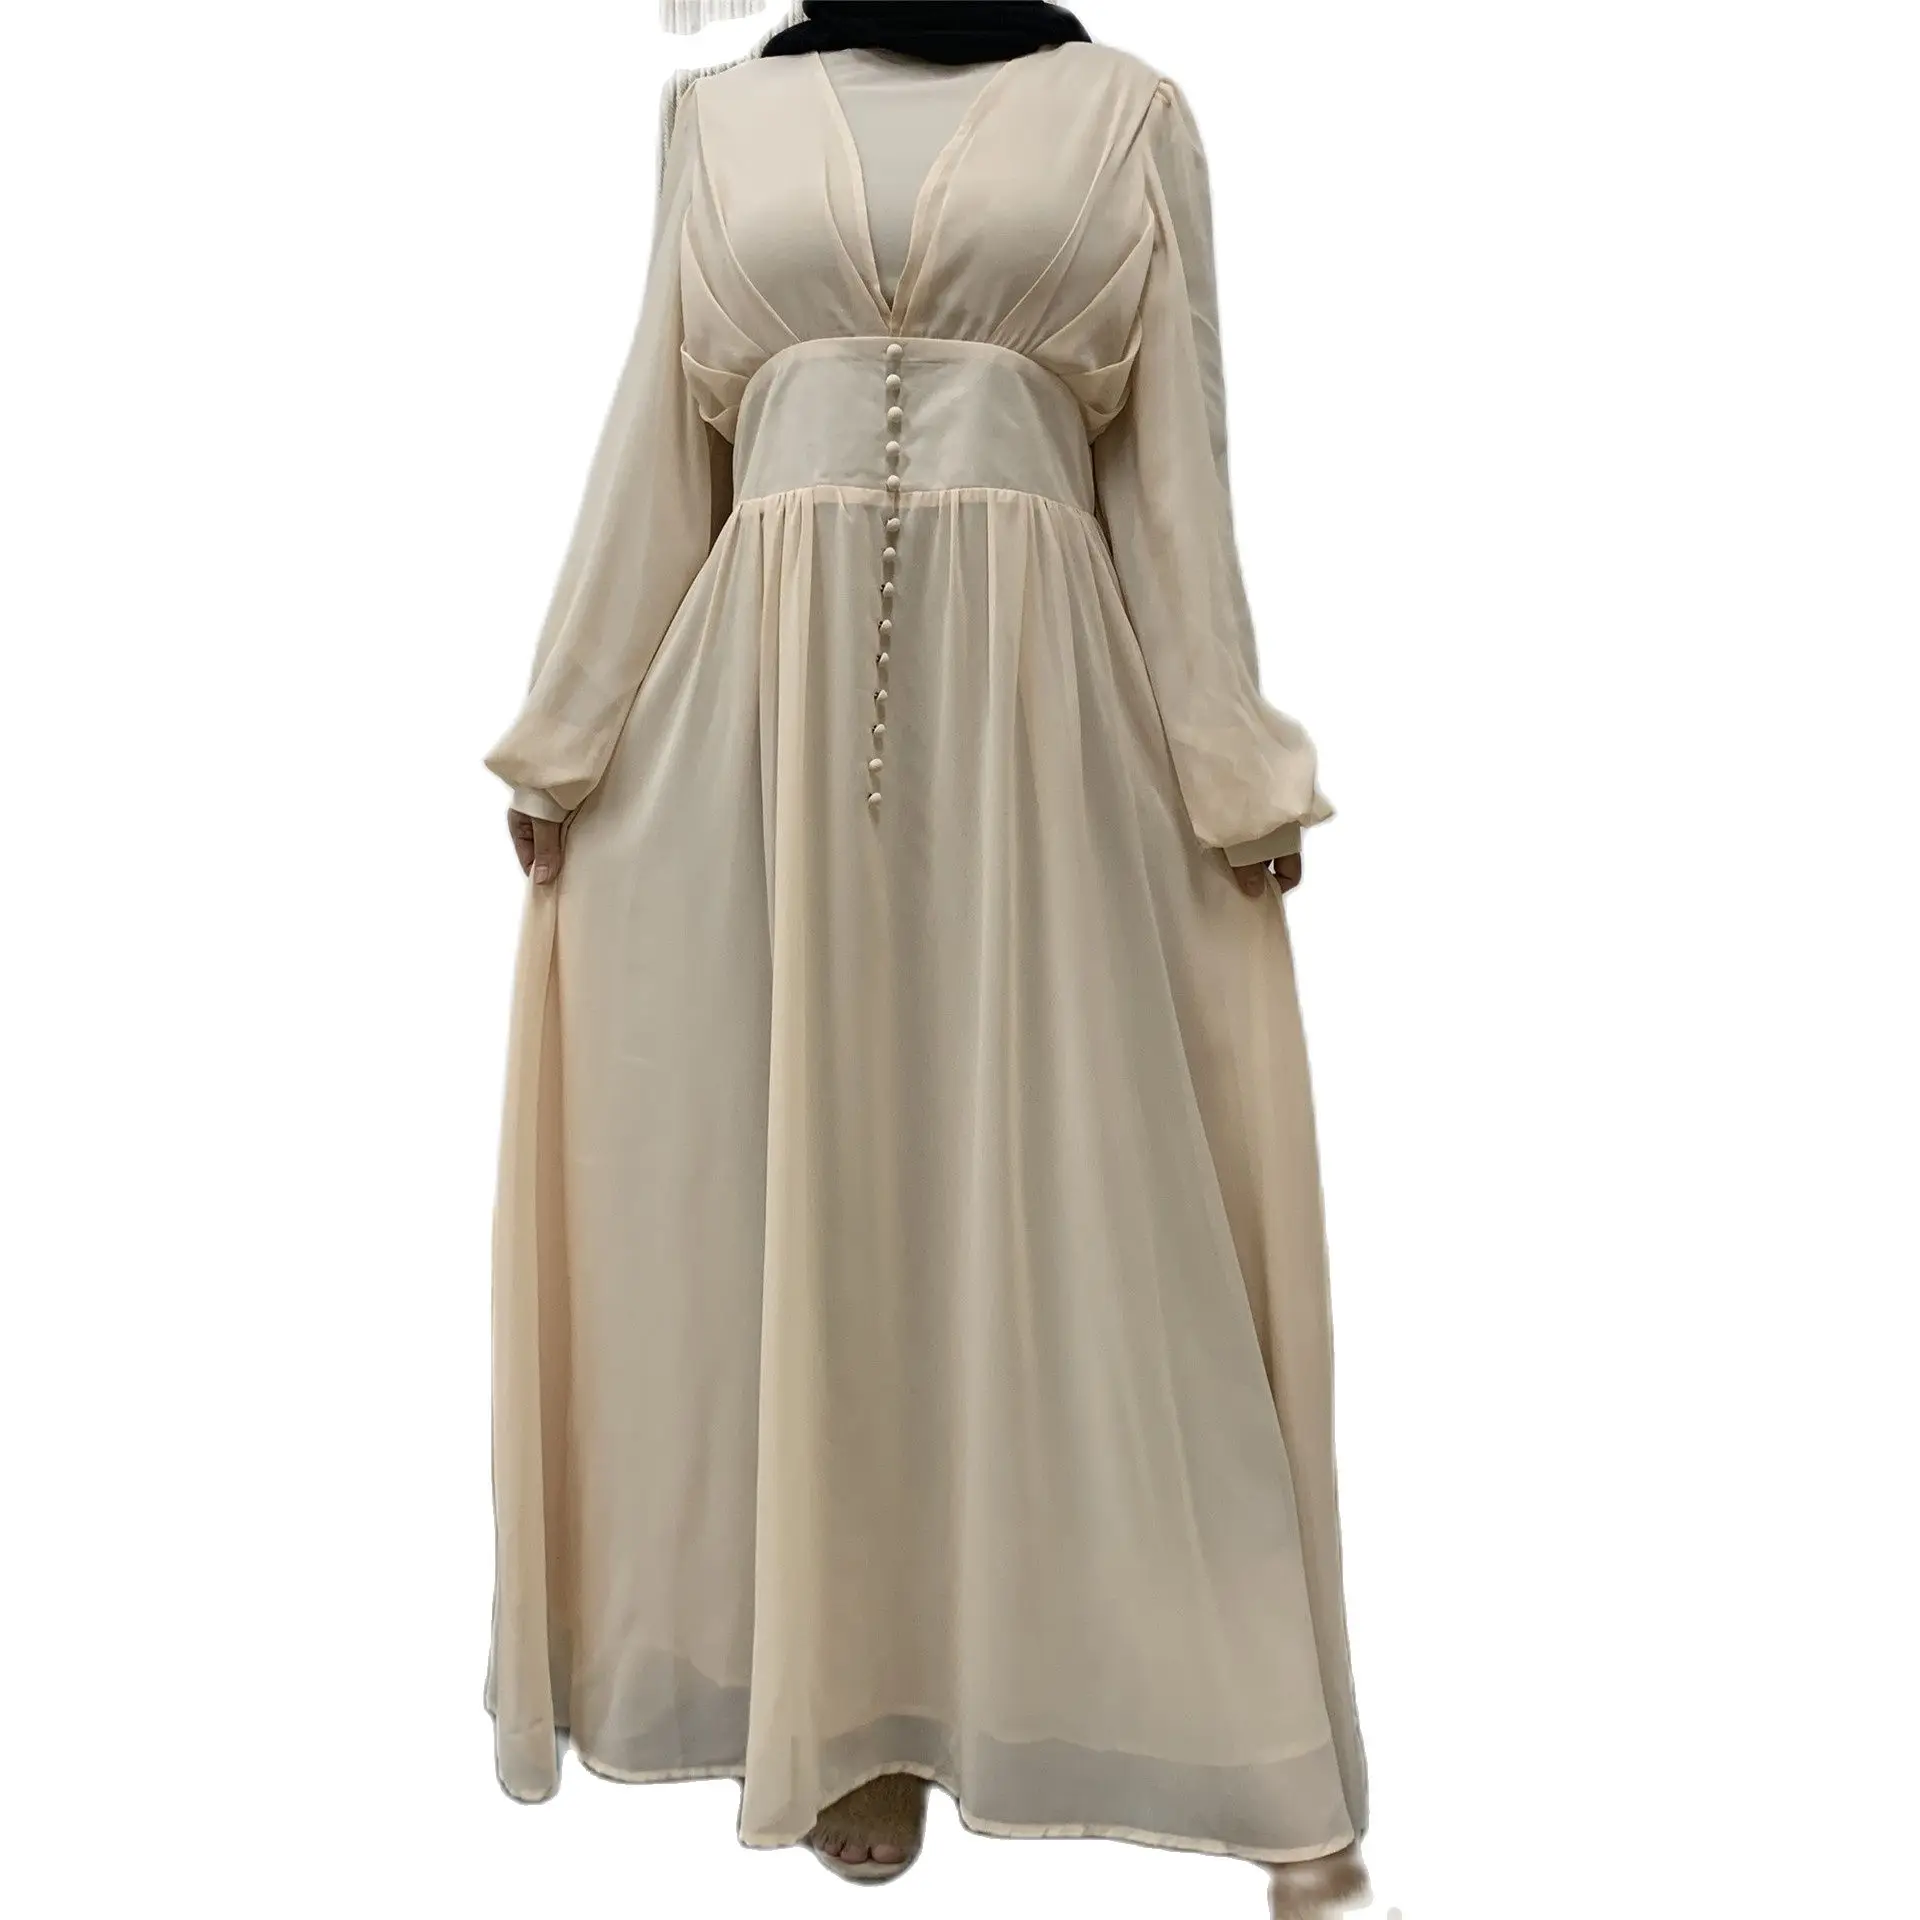 2022 Islamic Women'S Clothing European And American Muslim Fashion Simple Stitching Waist Arabian Turkish Dress Абая Cm282